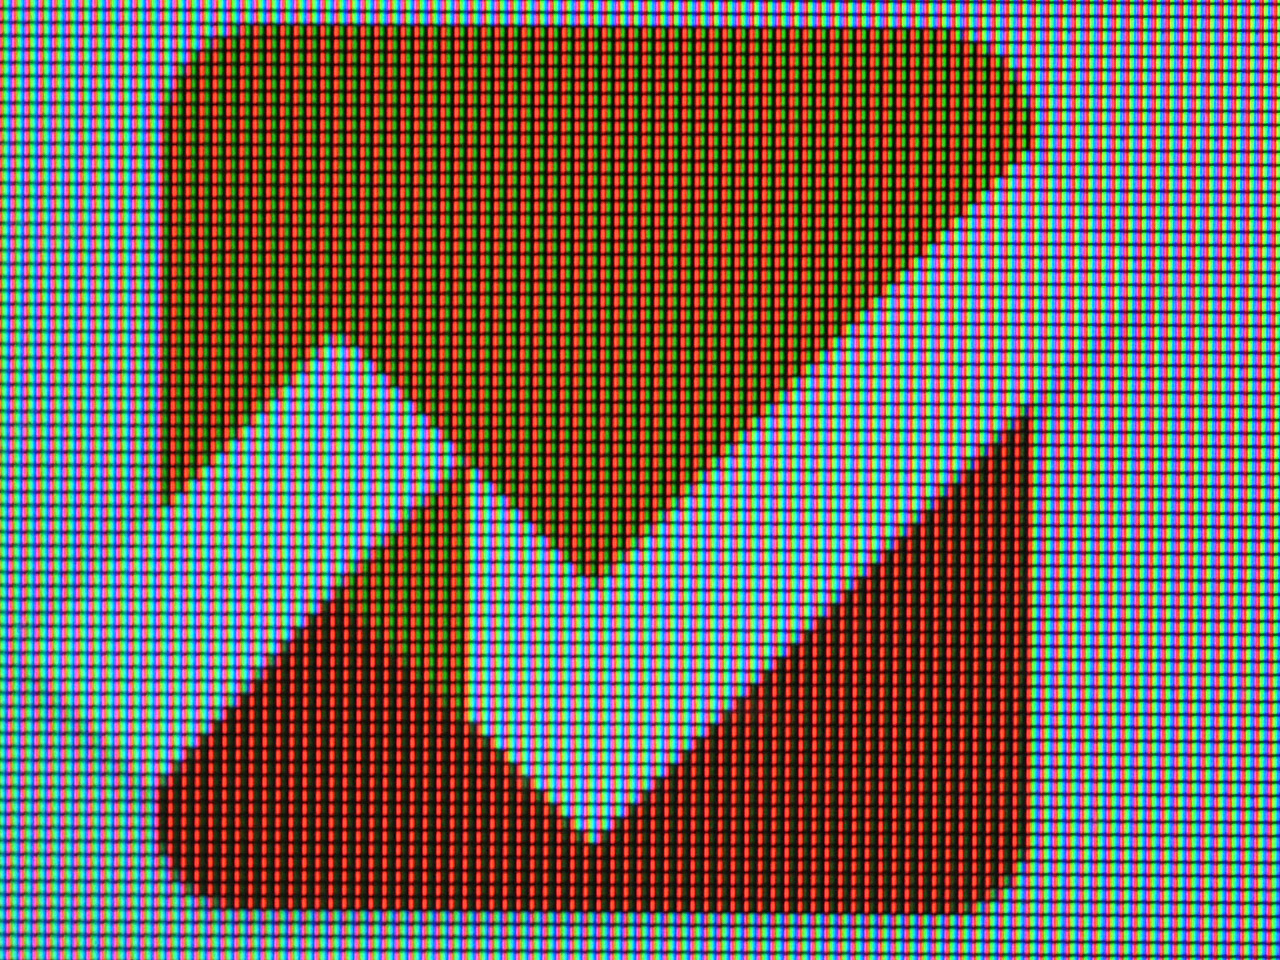 Matriz RGB del panel LCD del iPhone SE